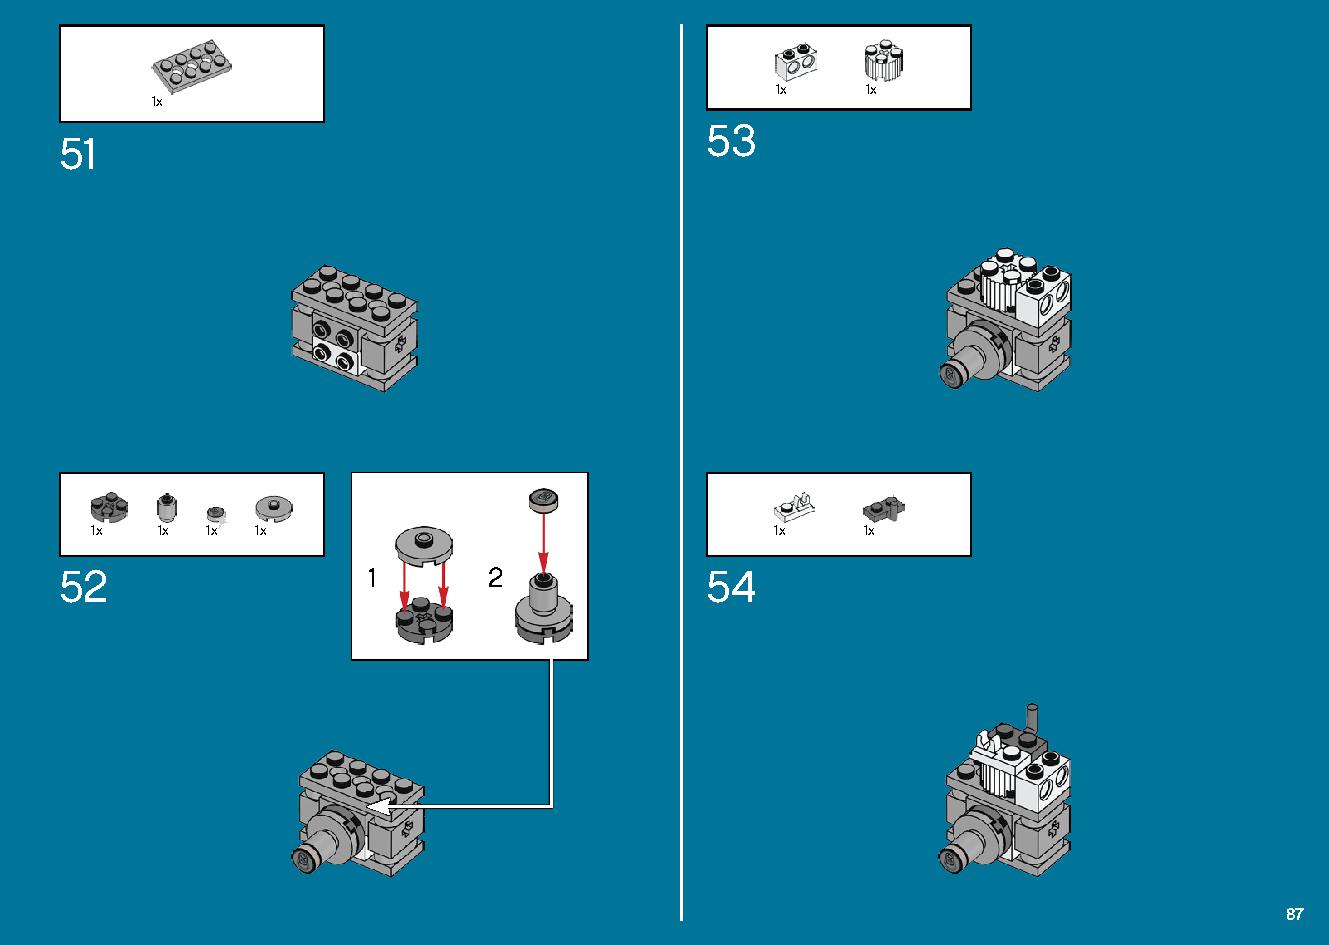 International Space Station 21321 レゴの商品情報 レゴの説明書・組立方法 87 page